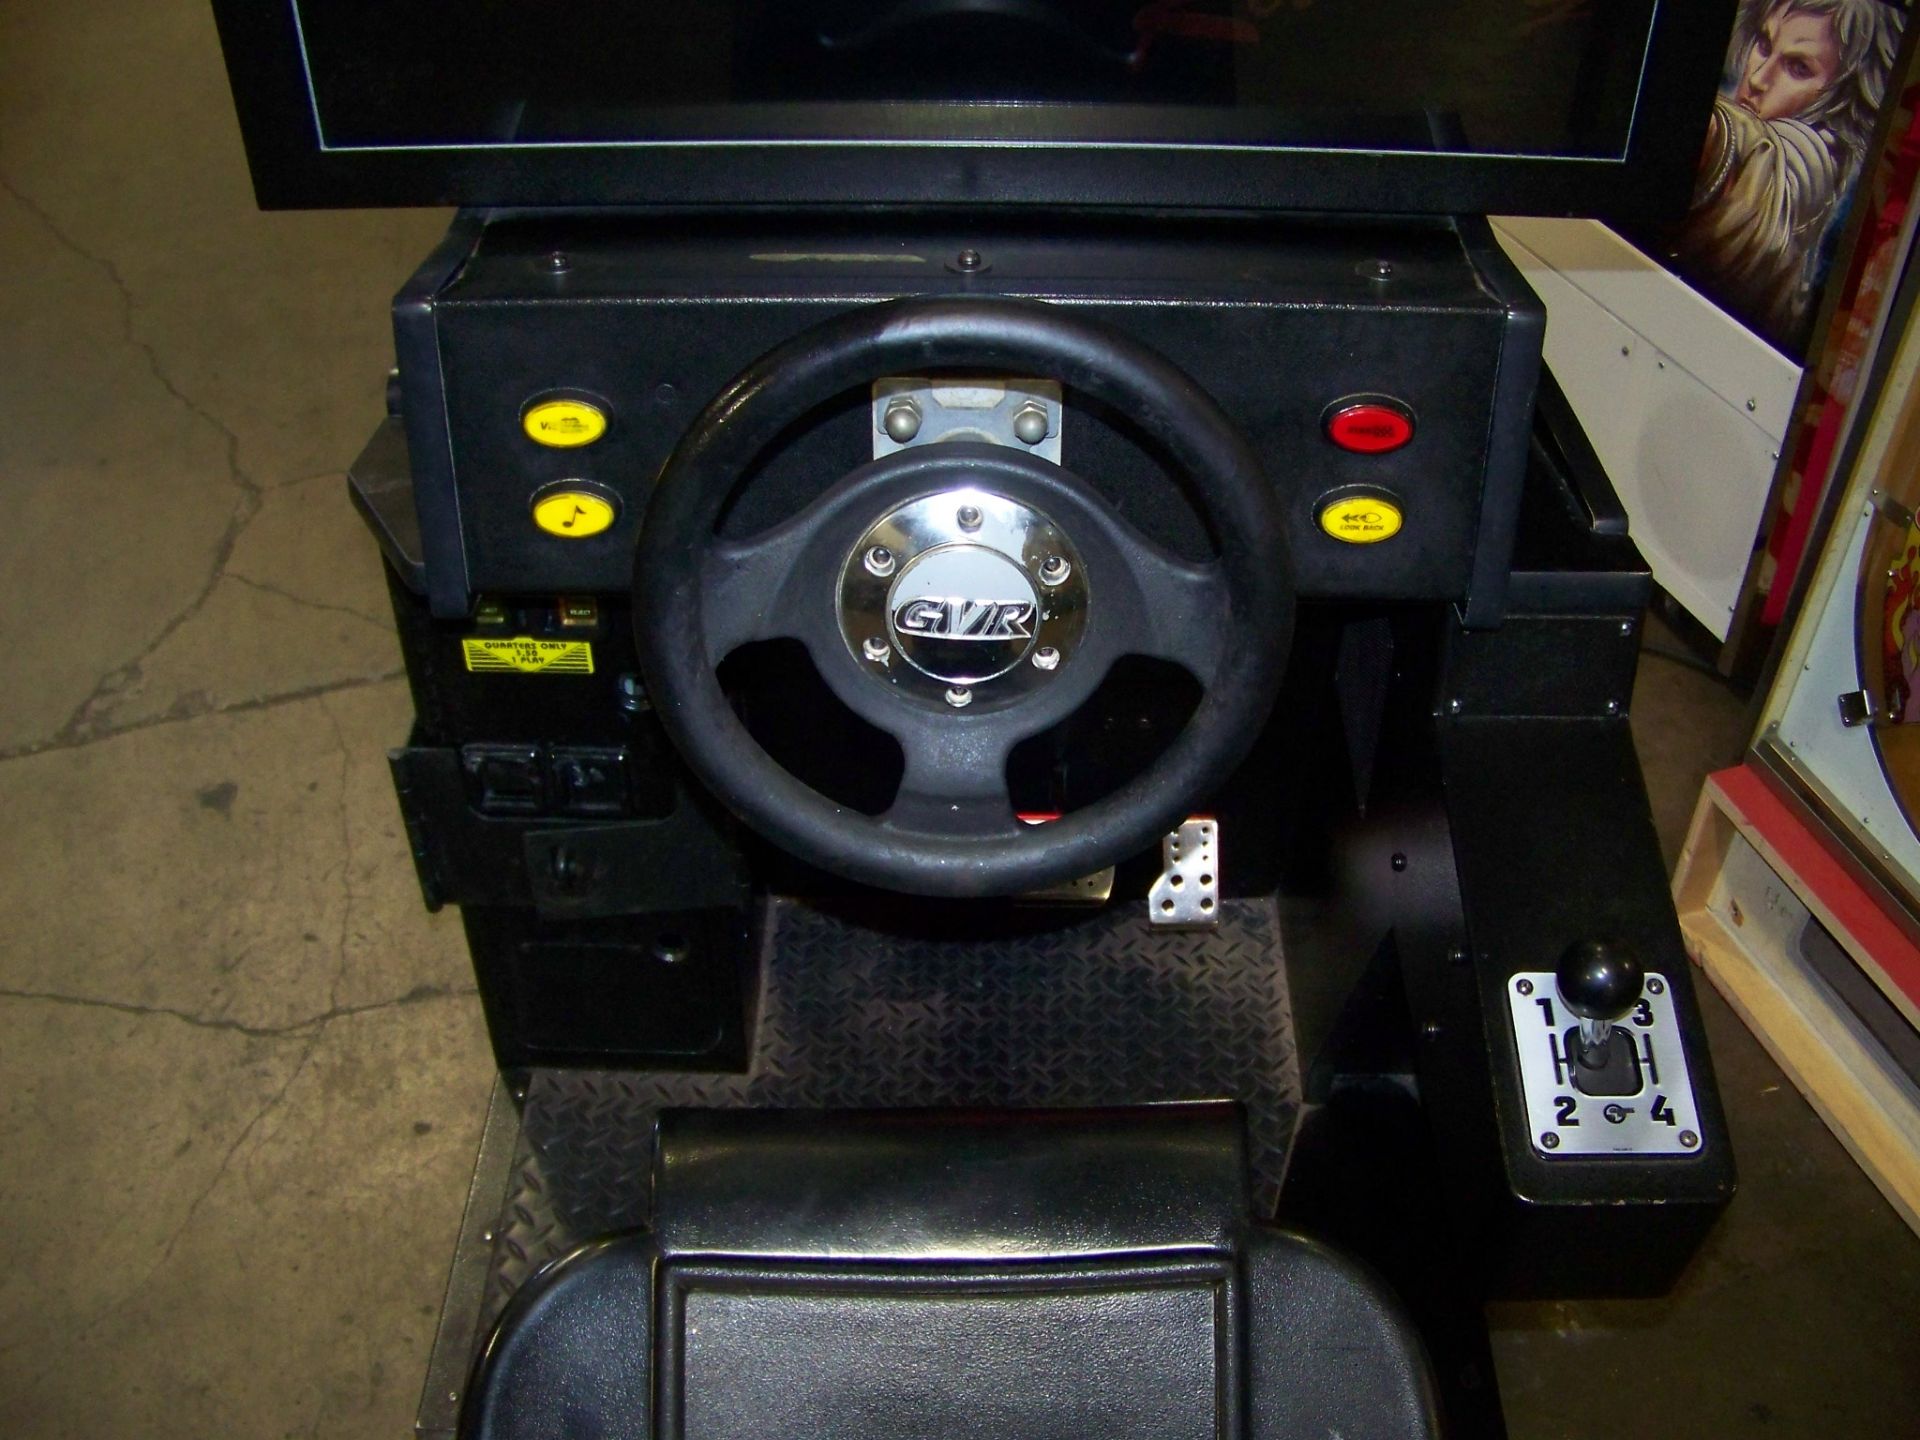 NASCAR RACING ARCADE GAME 32" LCD GLOBAL VR - Image 7 of 7